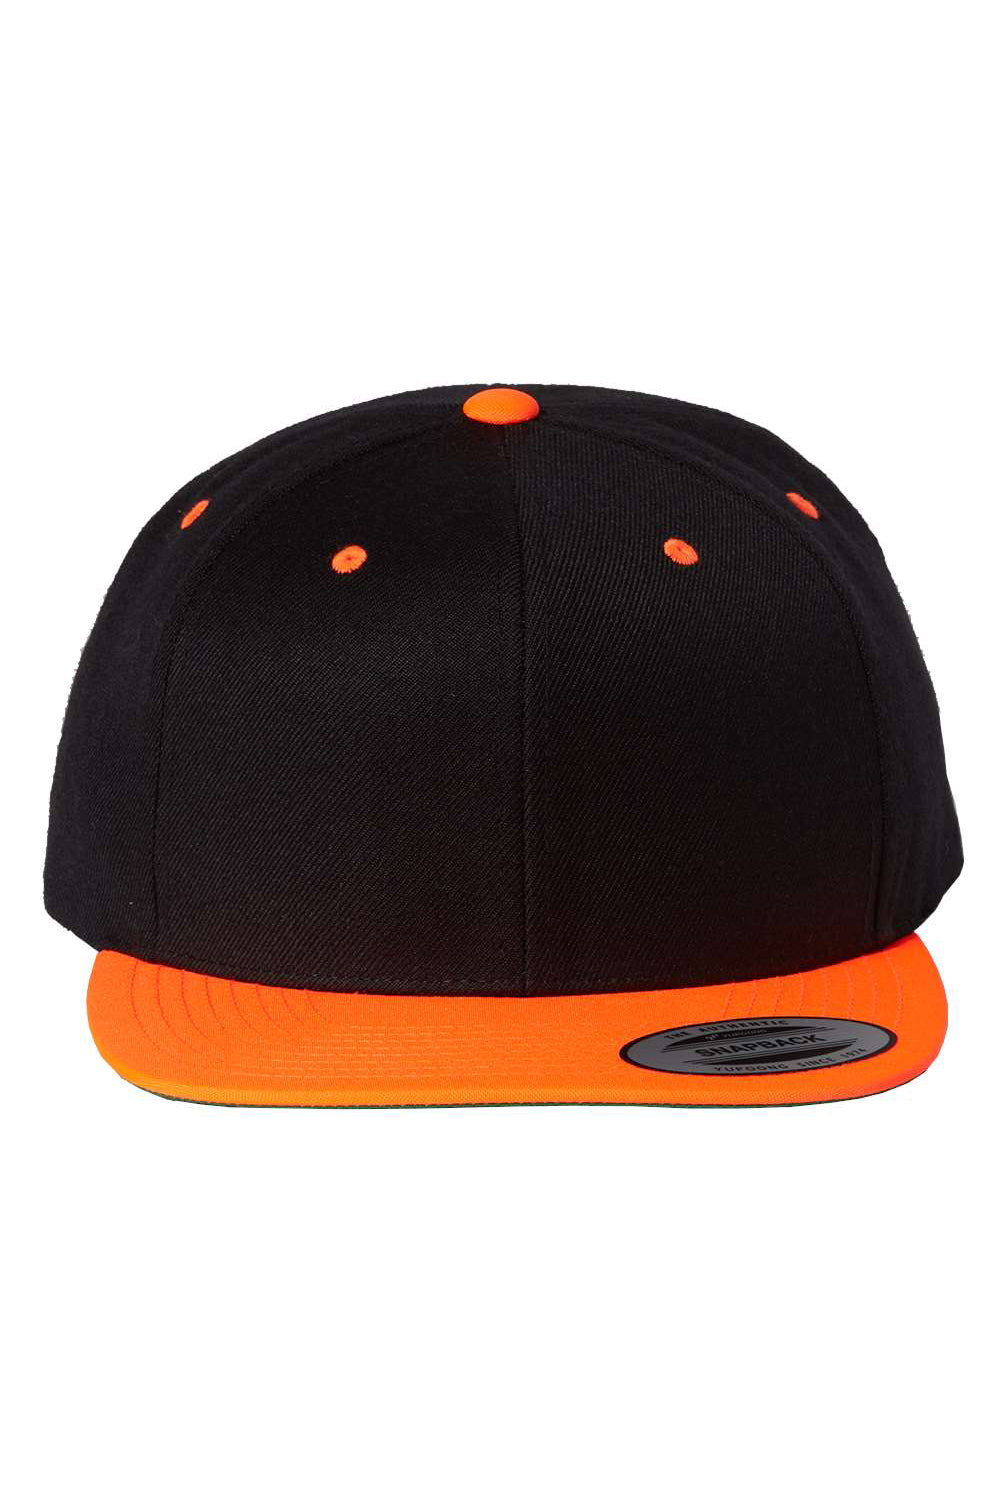 Yupoong 6089M Mens Premium Flat Bill Snapback Hat Black/Neon Orange Flat Front